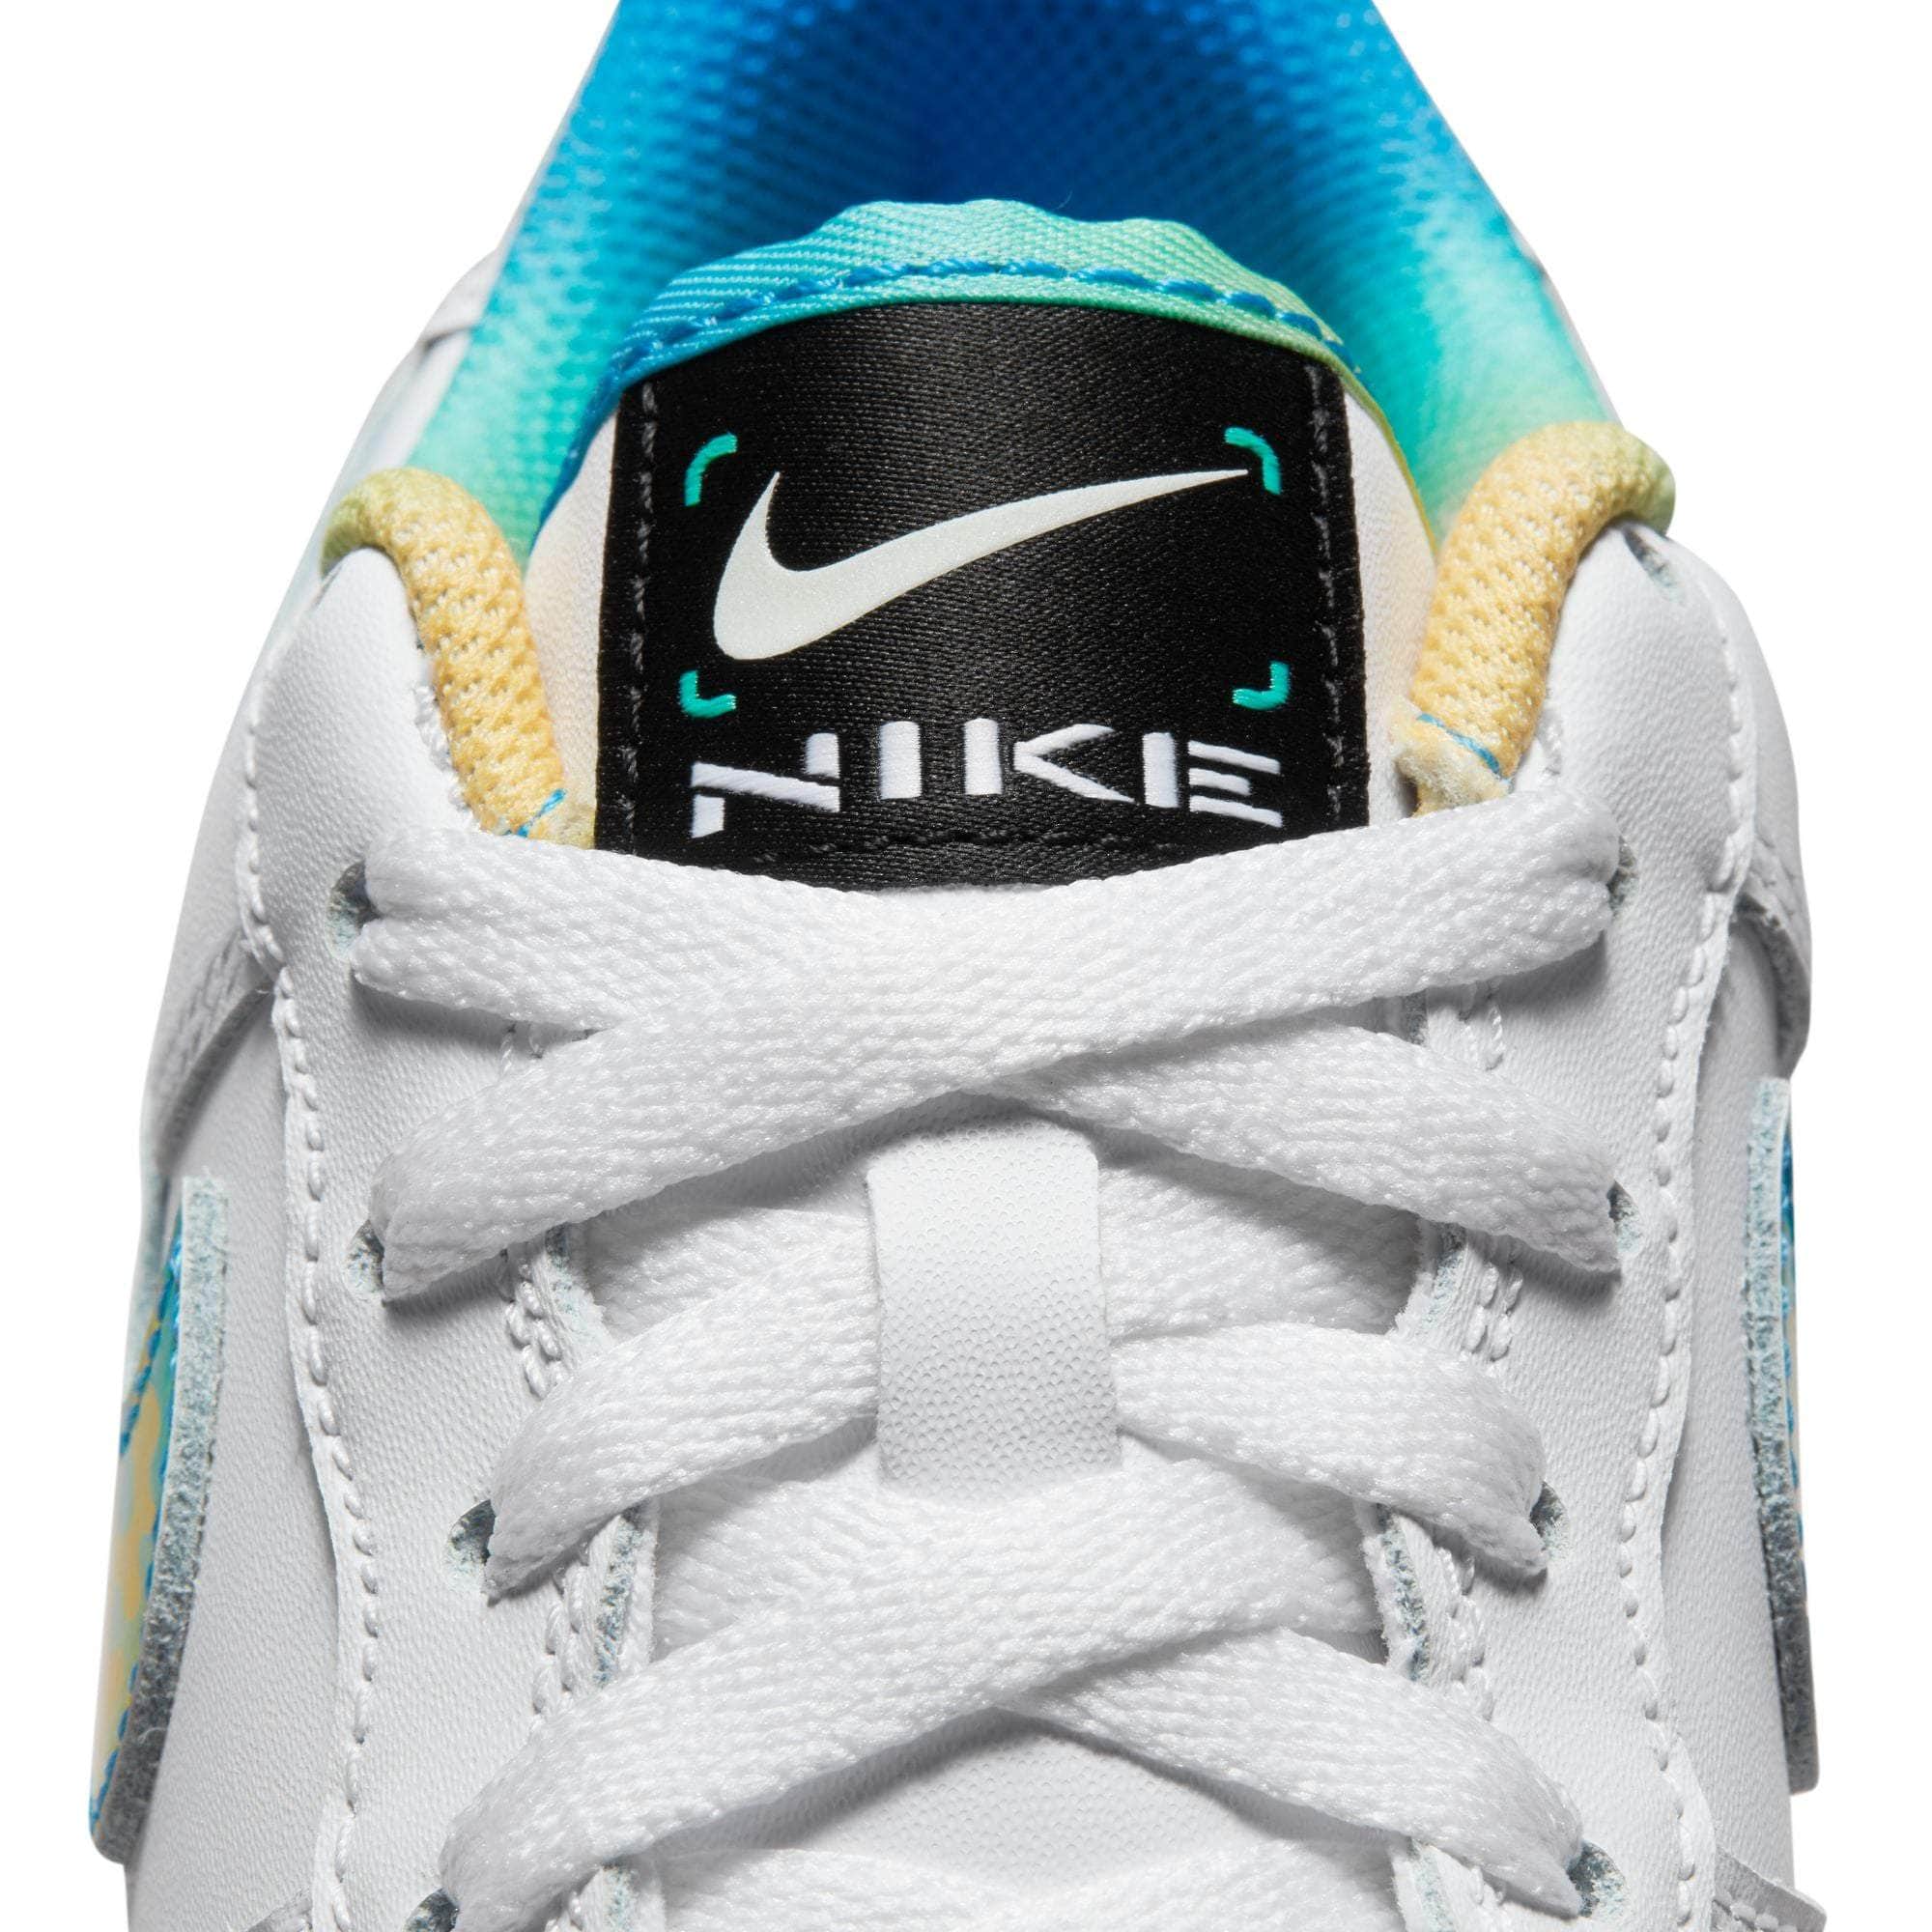 NIKE FOOTWEAR Nike Air Force 1 LV8 "Unlock Your Space" - Boy's GS